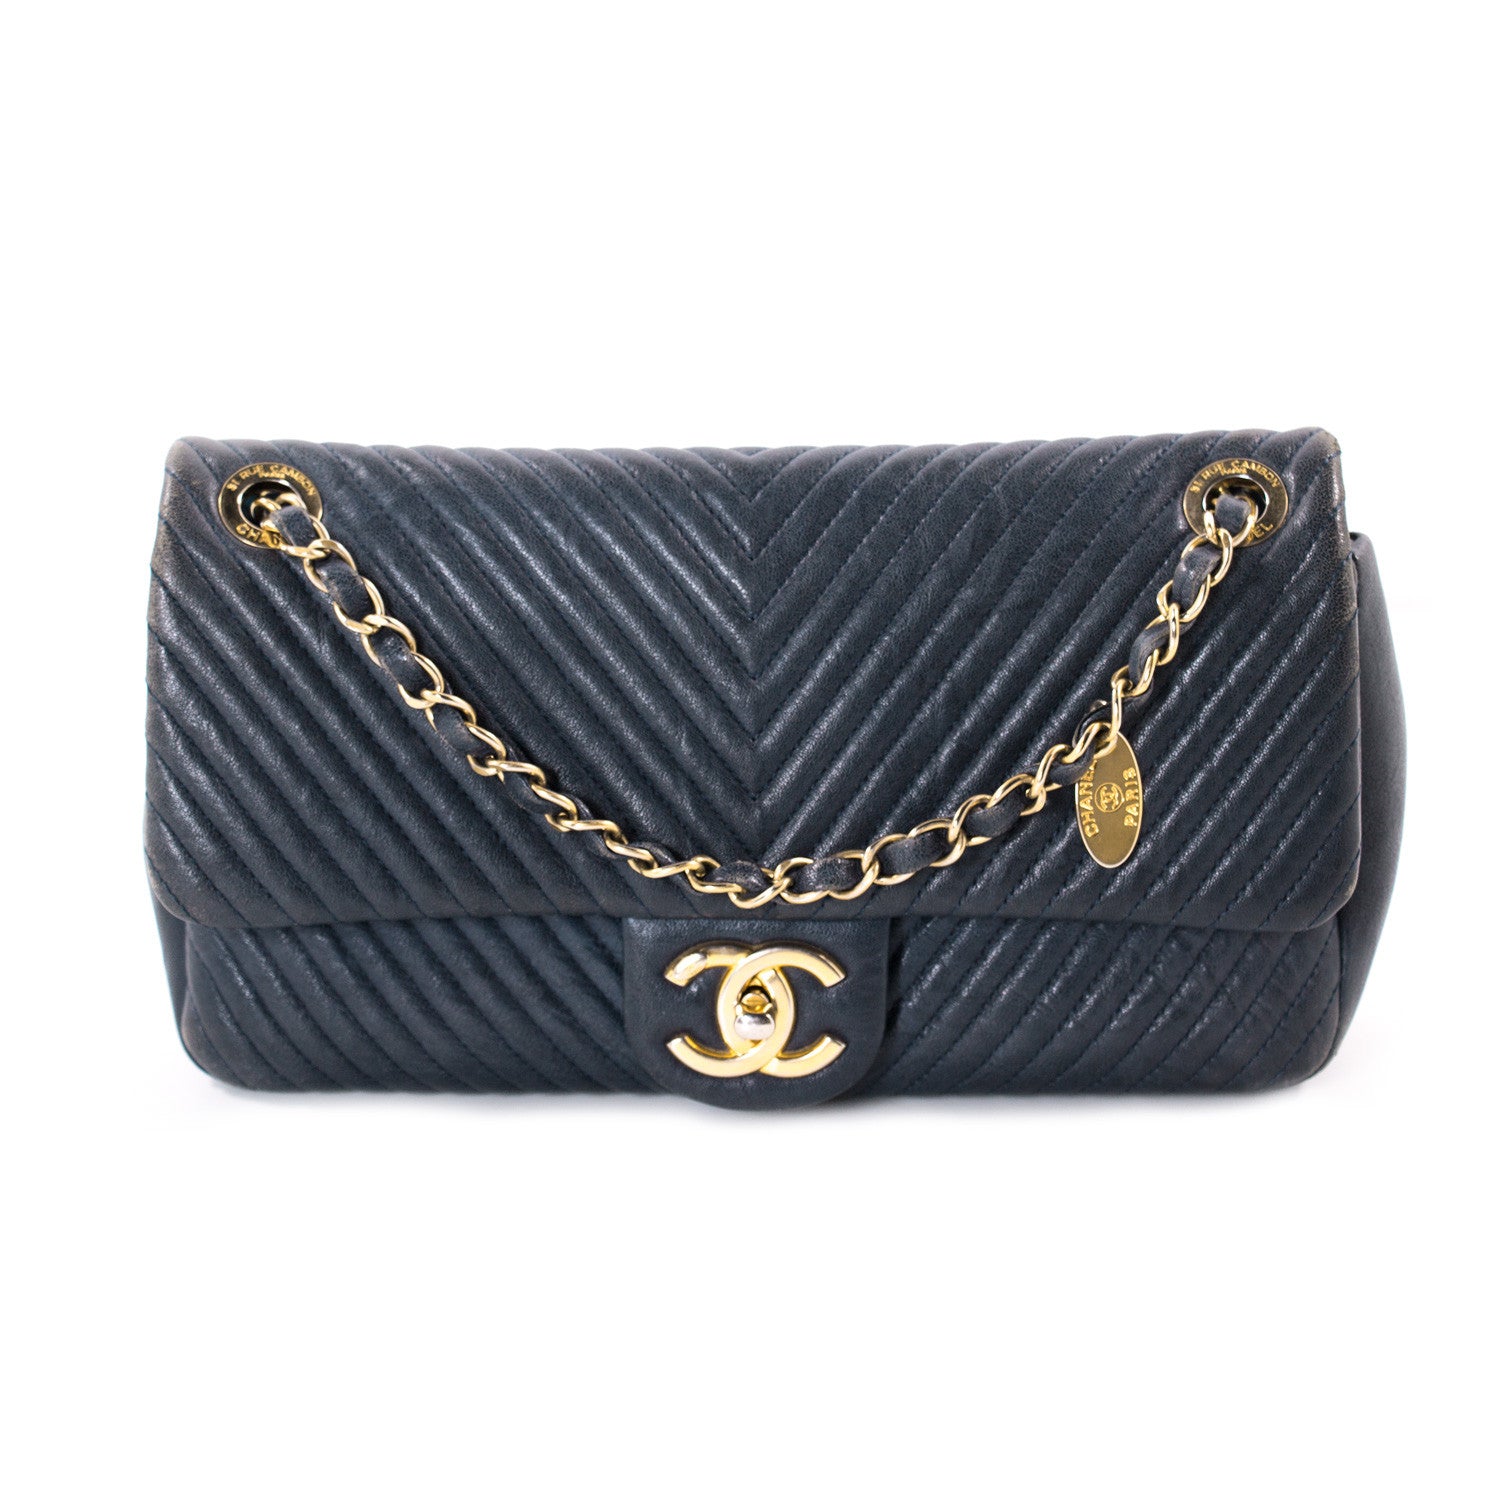 Shop authentic Chanel Medium Chevron Flap Bag at revogue for just